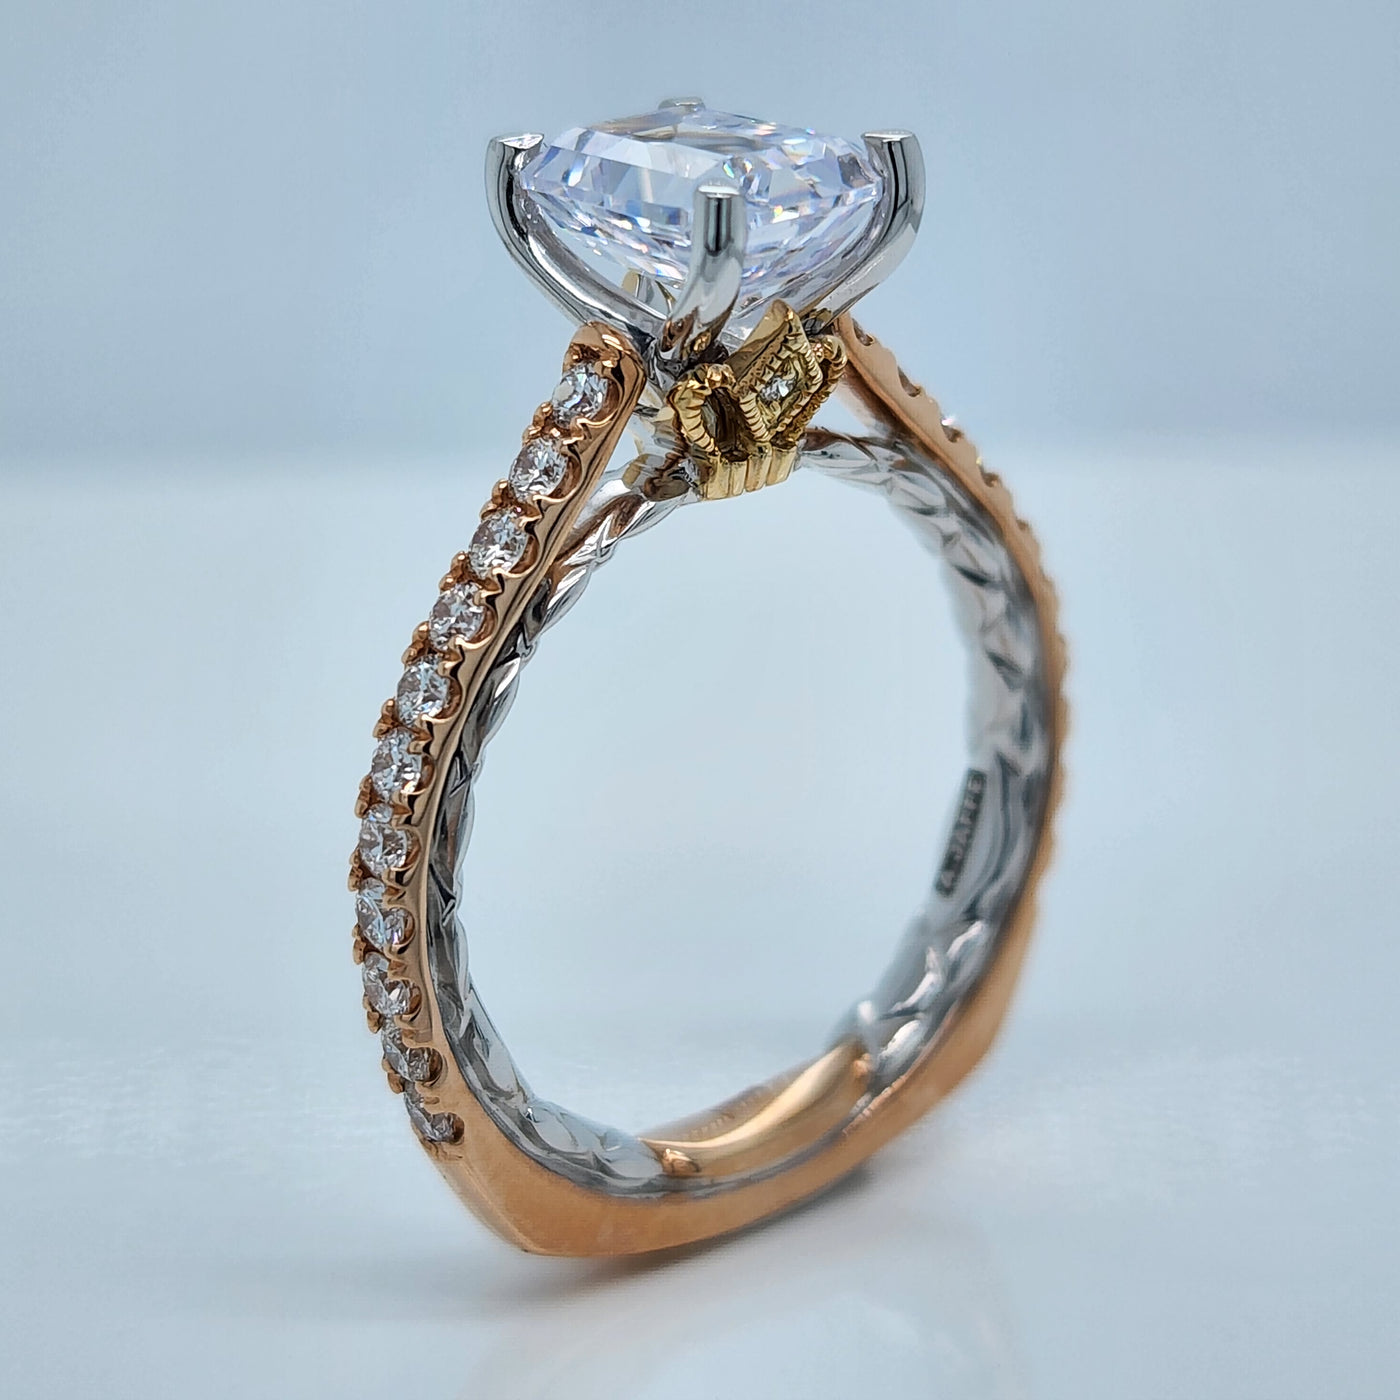 3 Tone Emerald Cut Engagement Ring With Euroshank